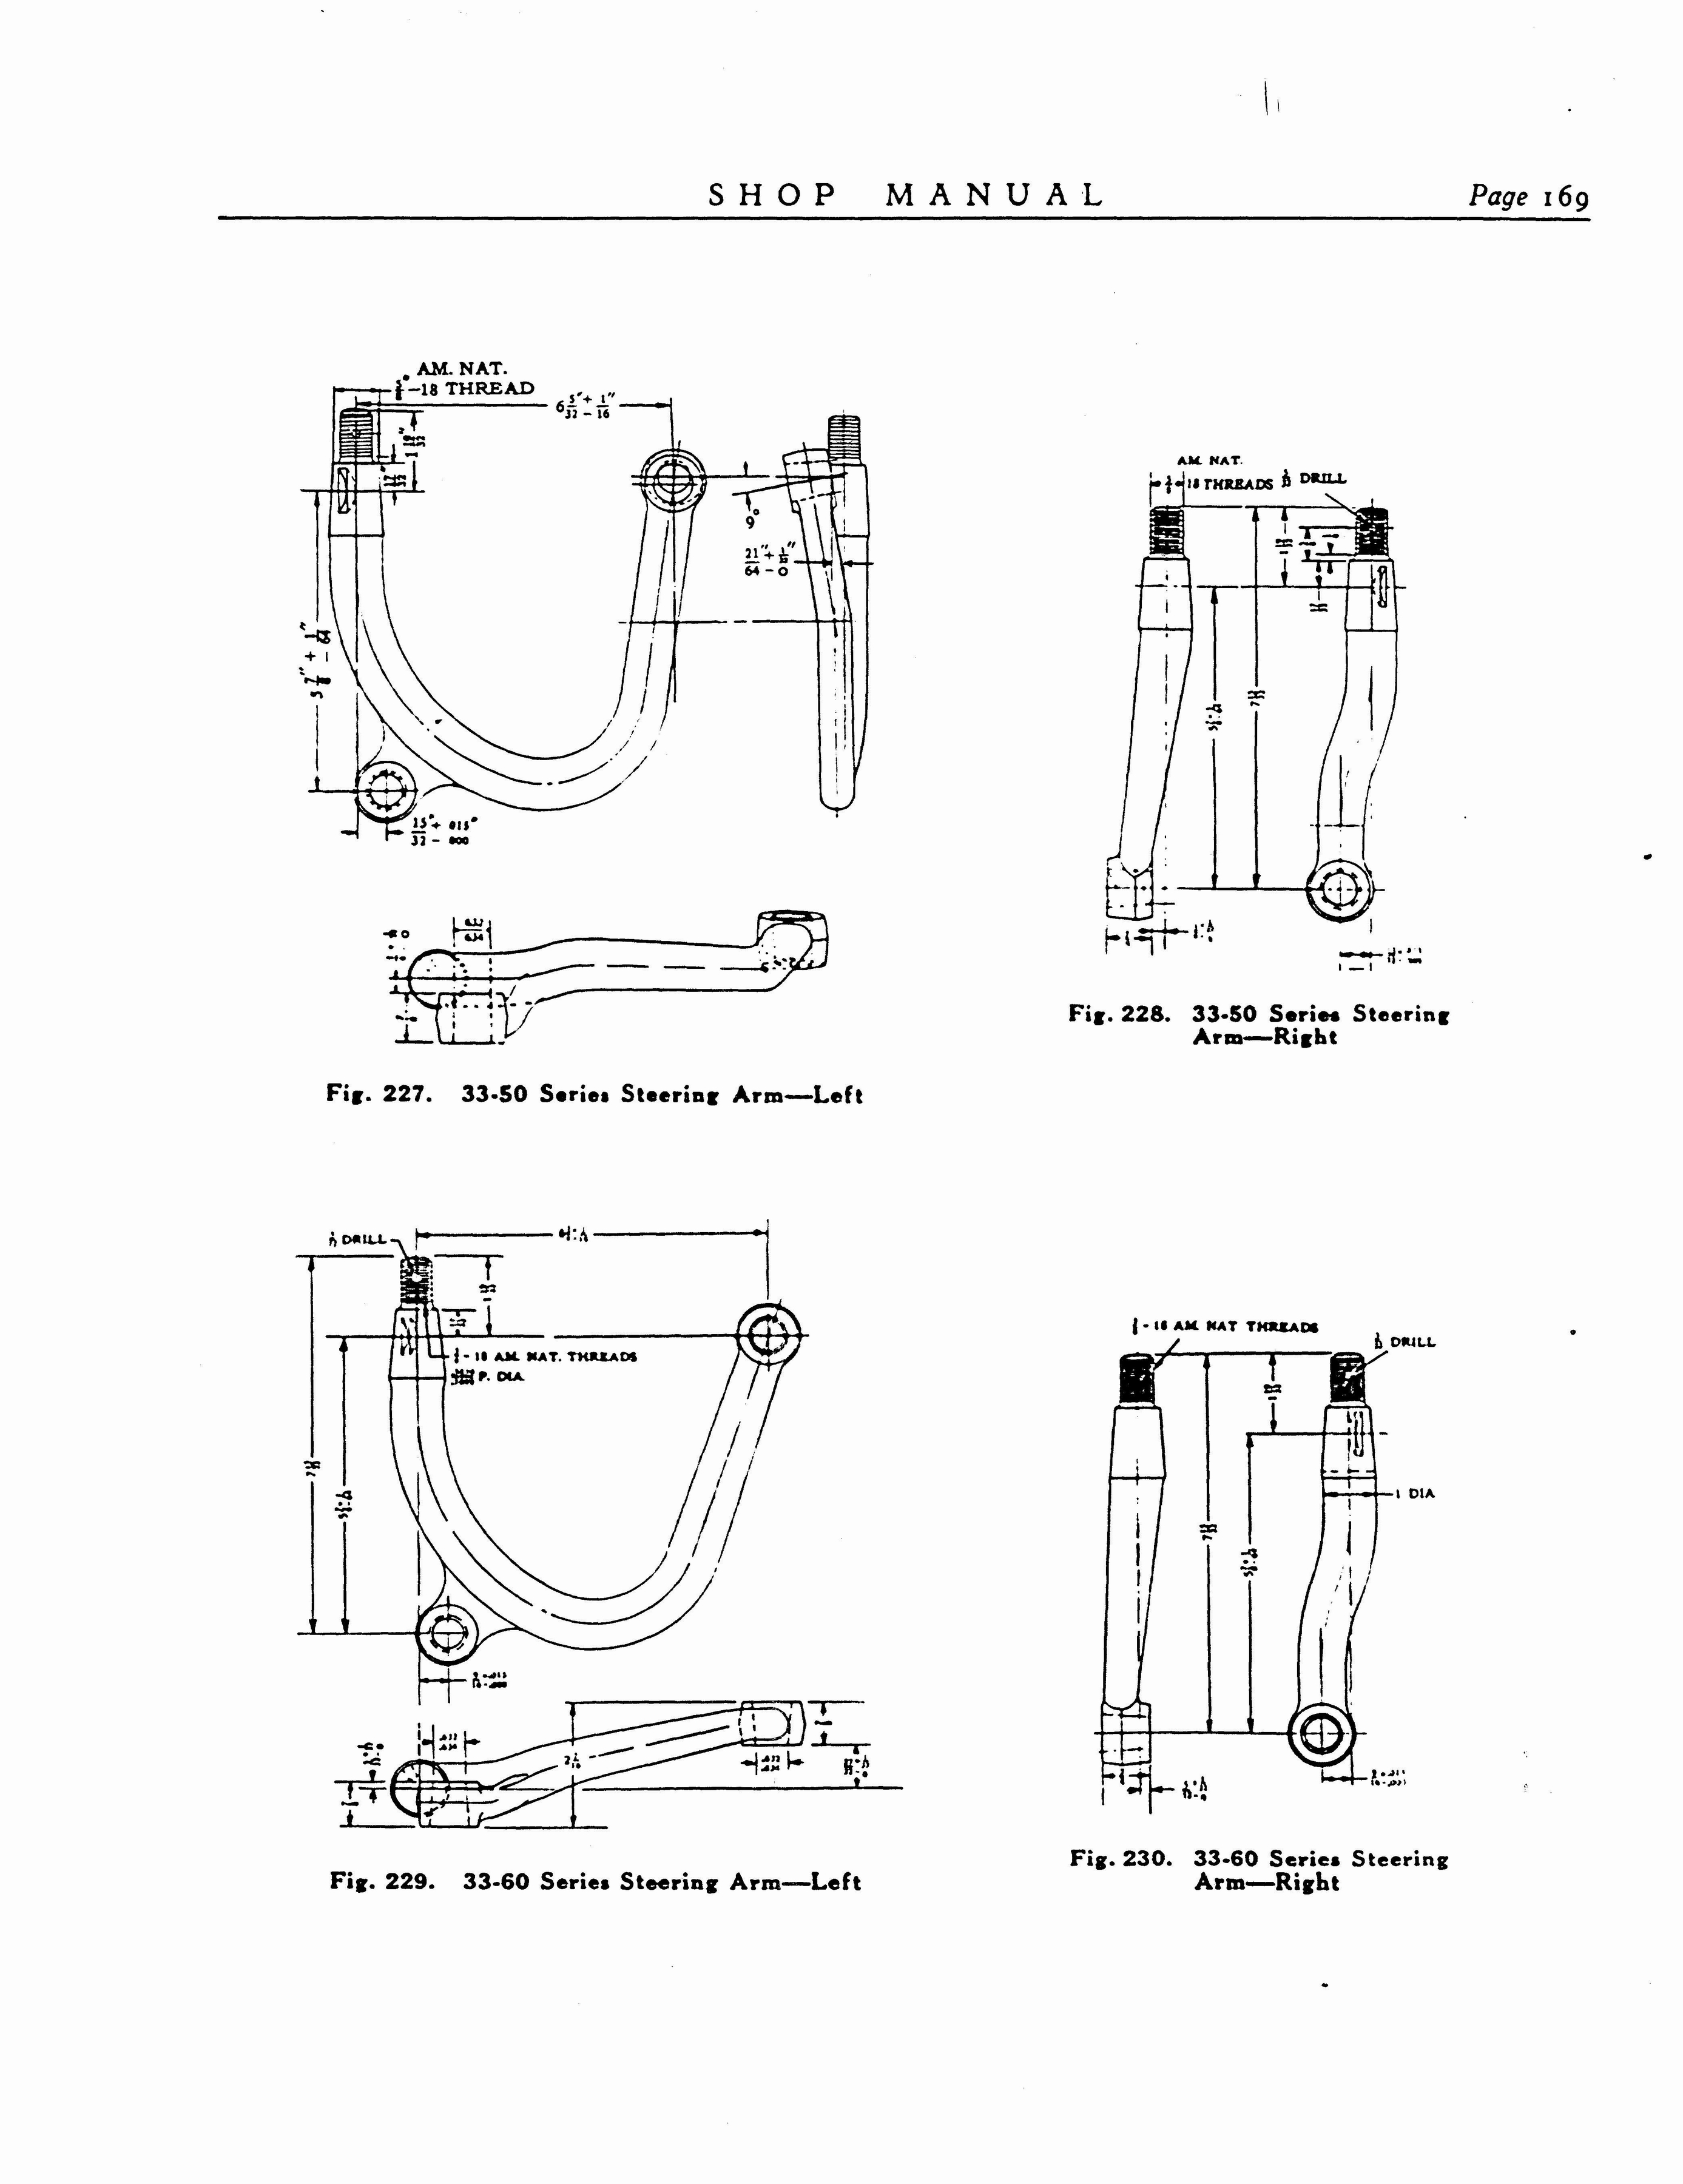 n_1933 Buick Shop Manual_Page_170.jpg